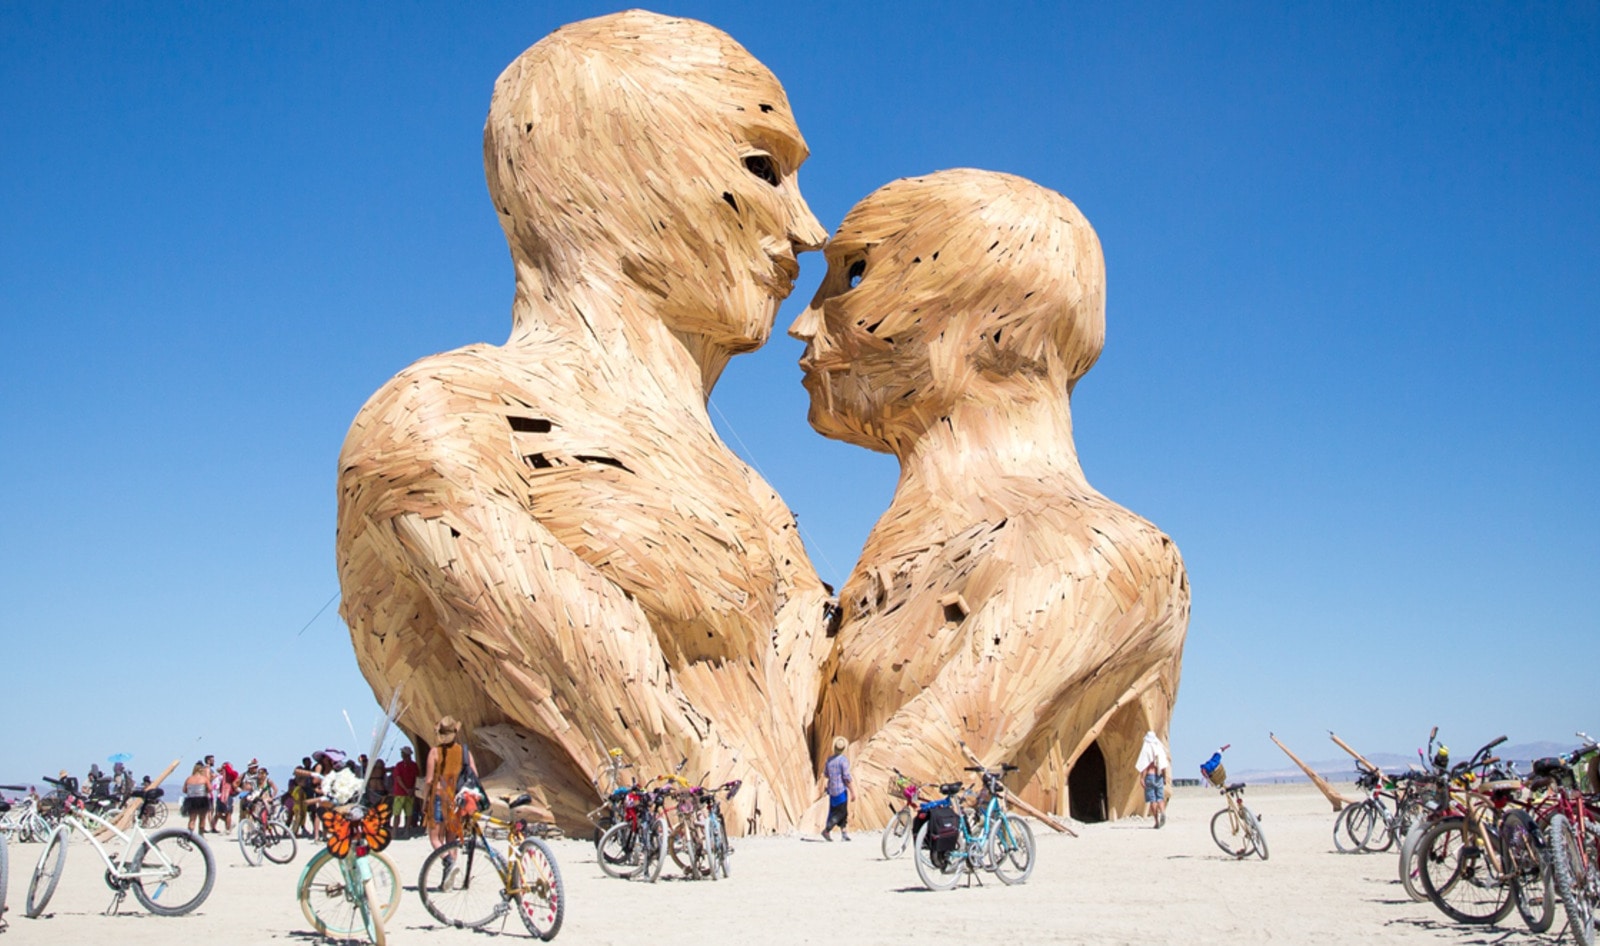 The Ultimate Vegan Guide to Burning Man